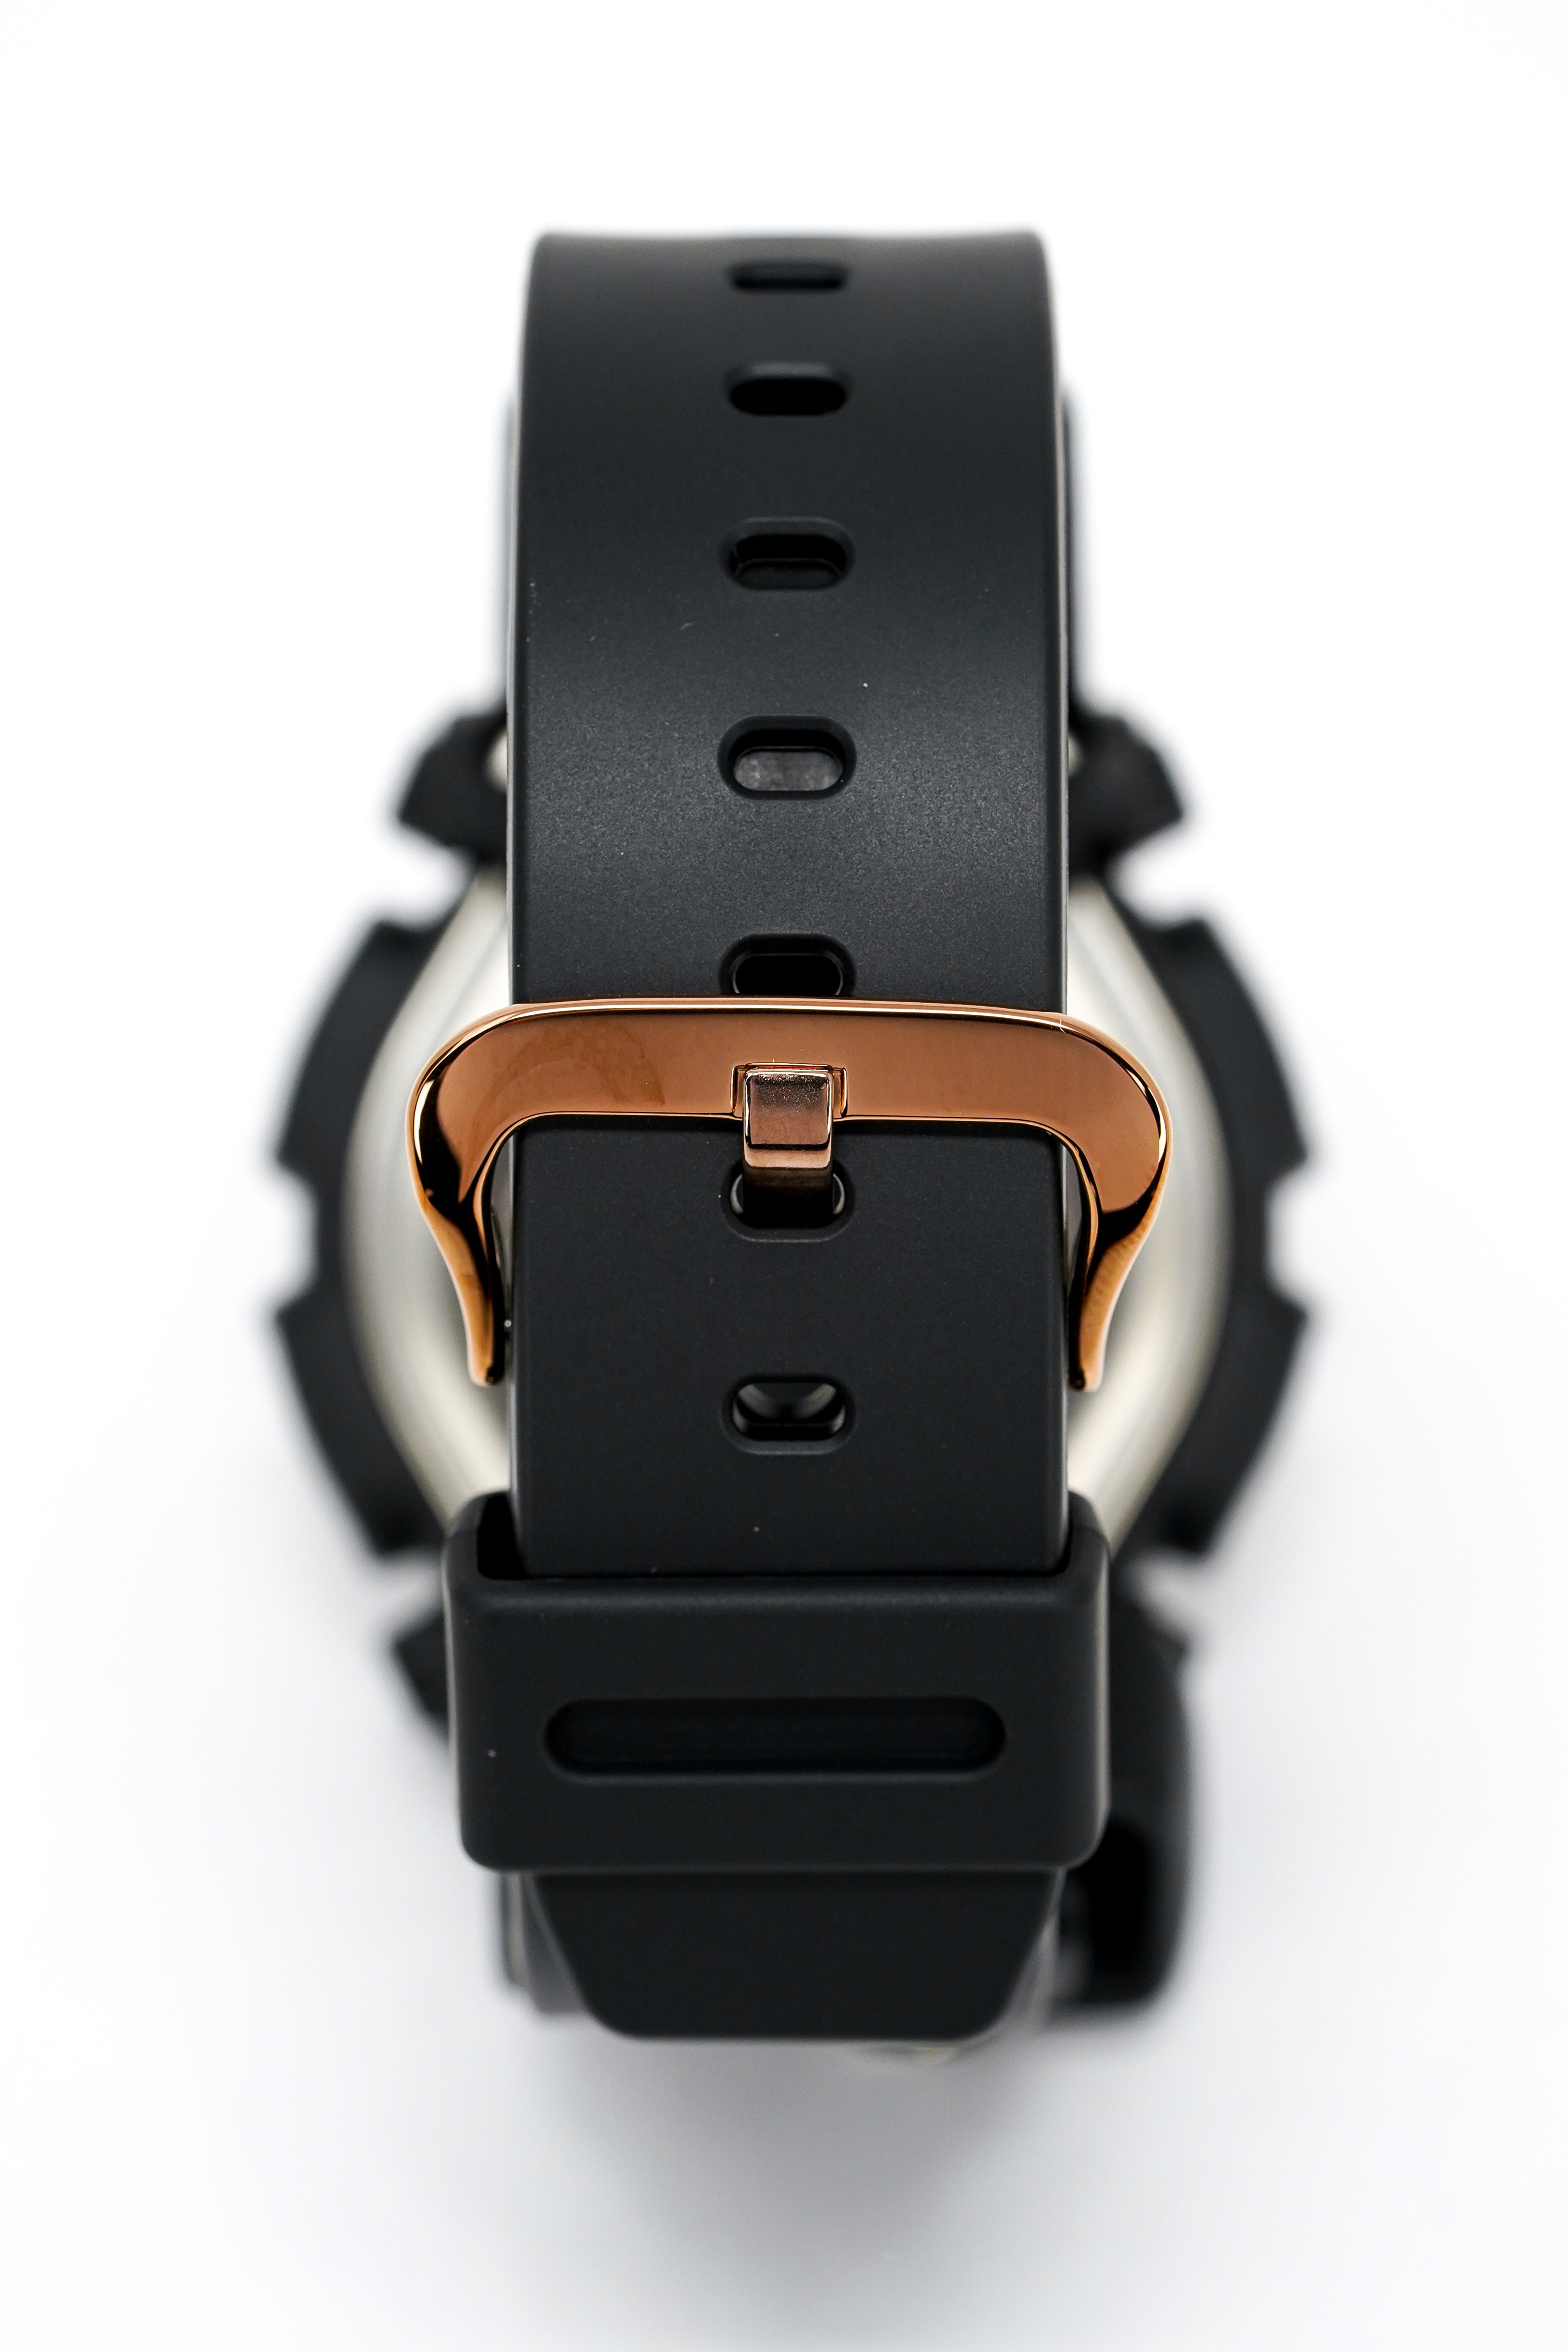 Casio G-Shock Watch Men's Big Case Black DW-9052GBX-1A4DR